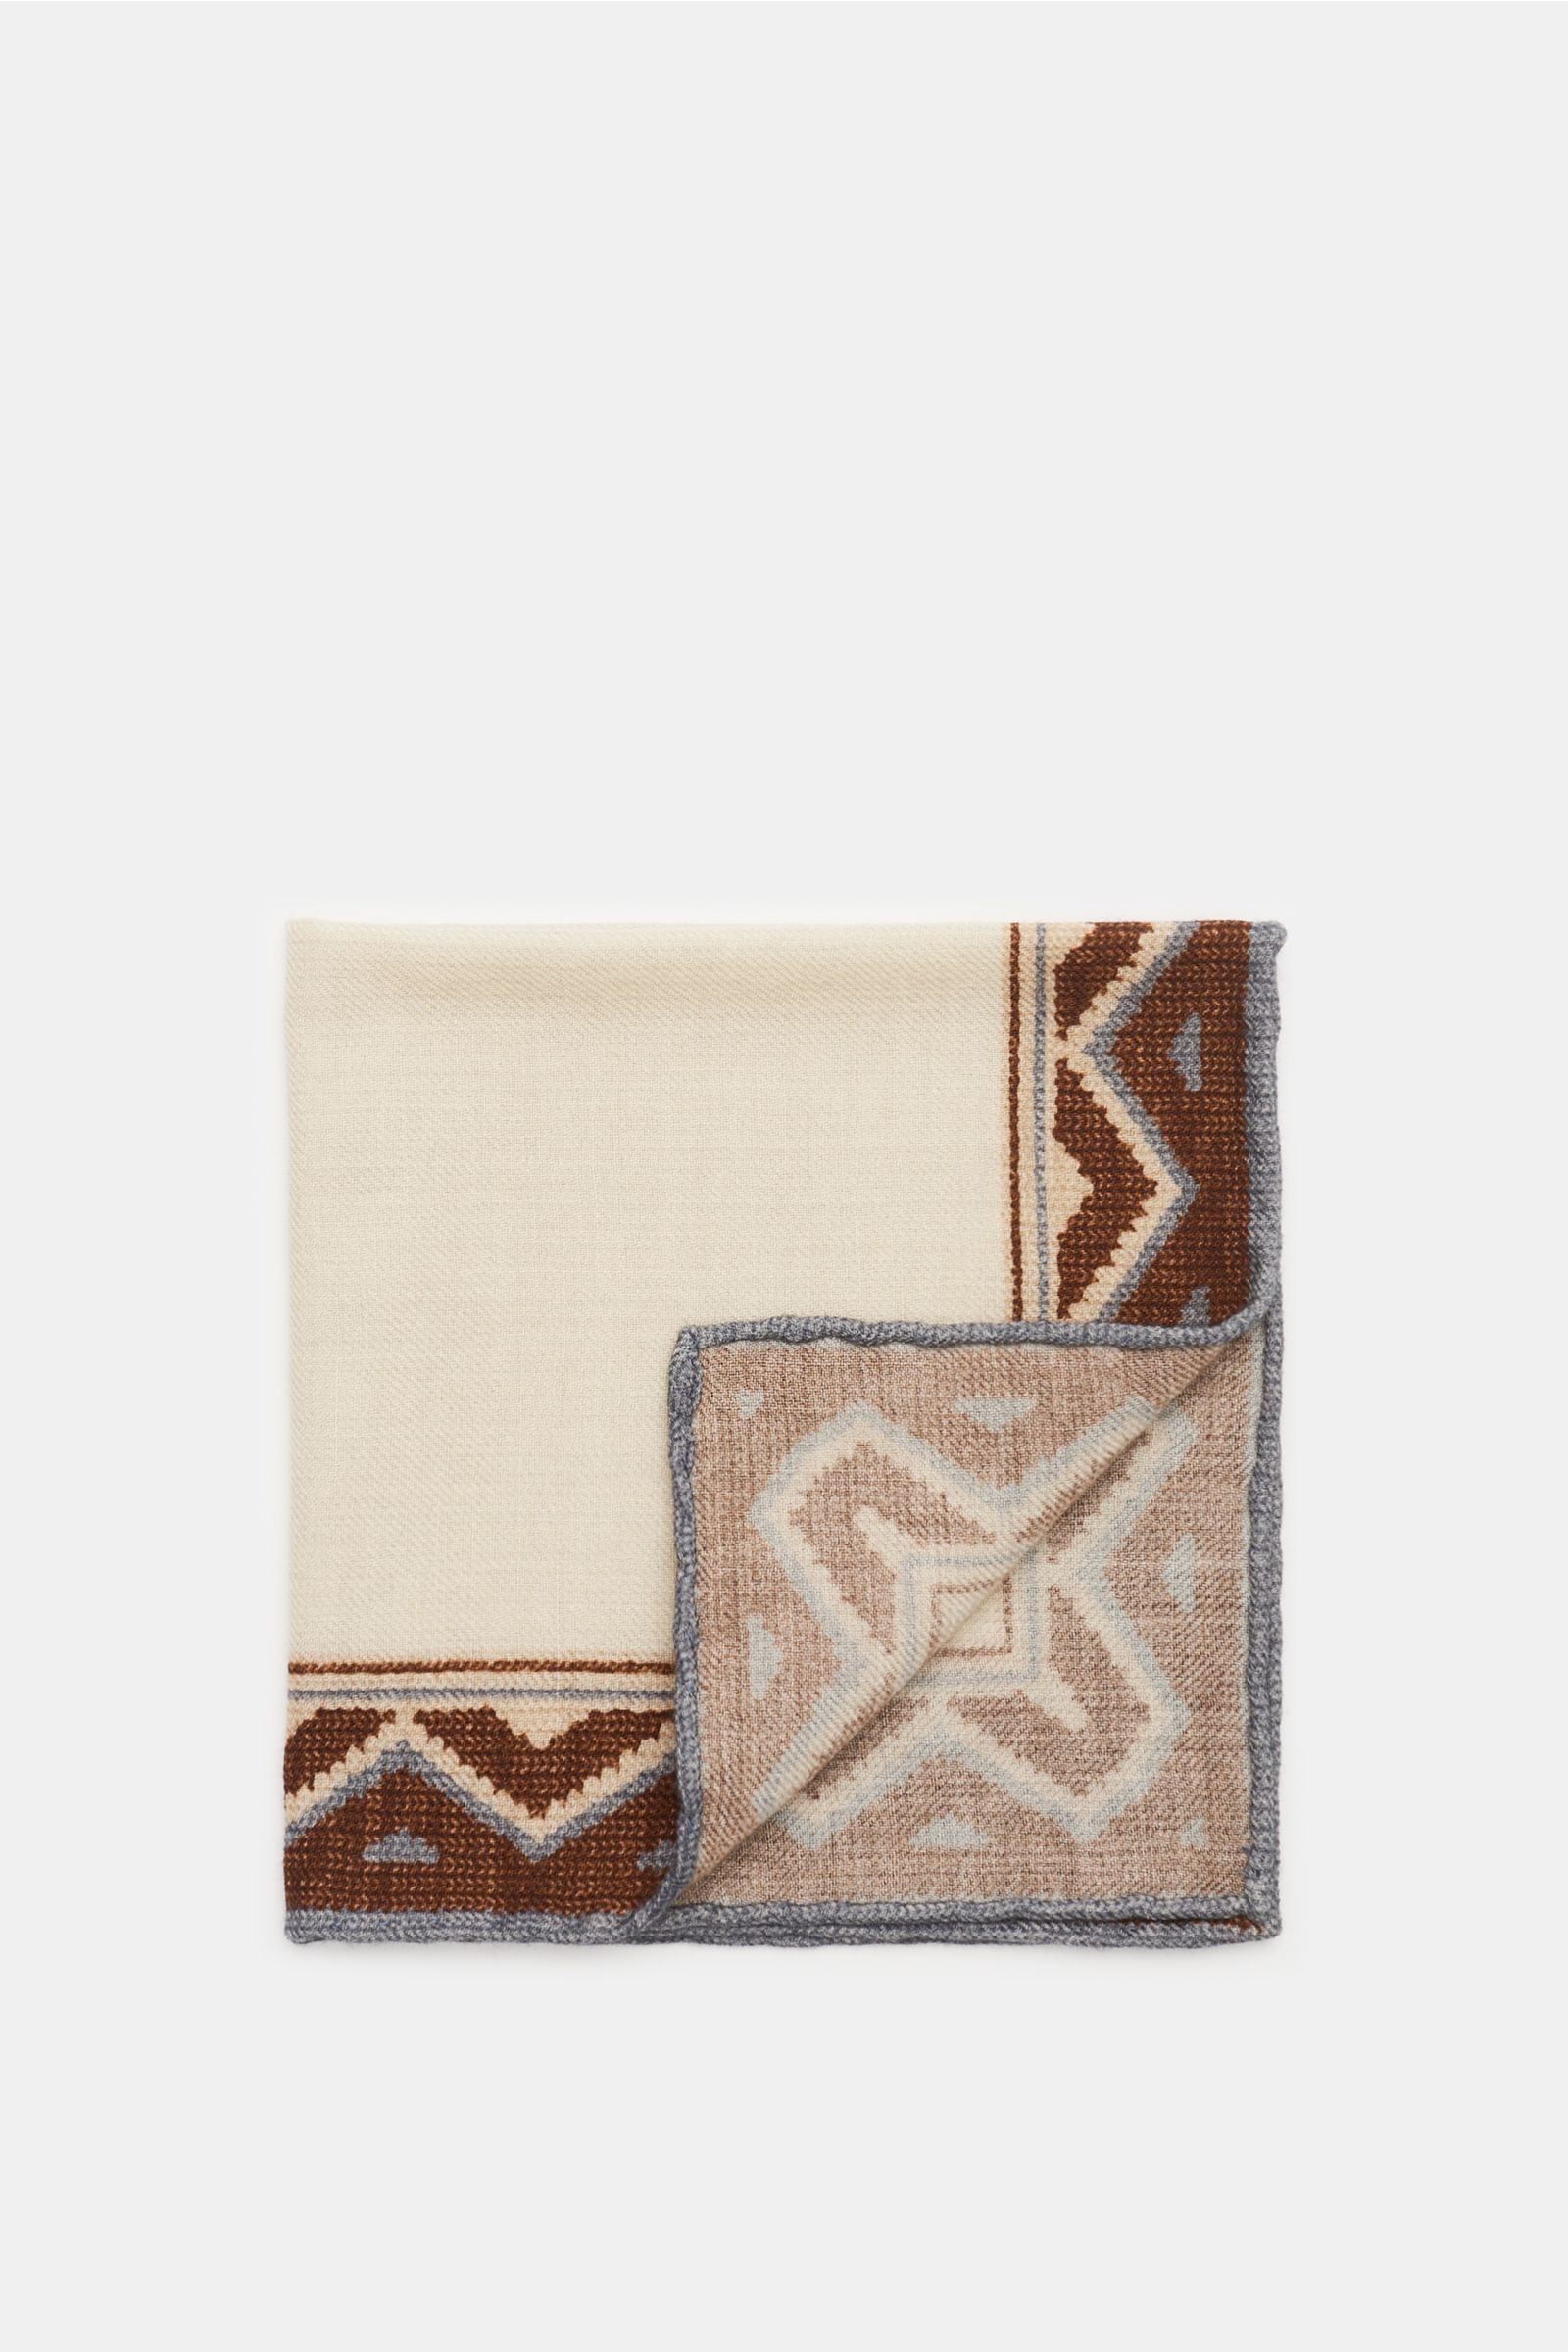 Pocket square, cream/brown patterned